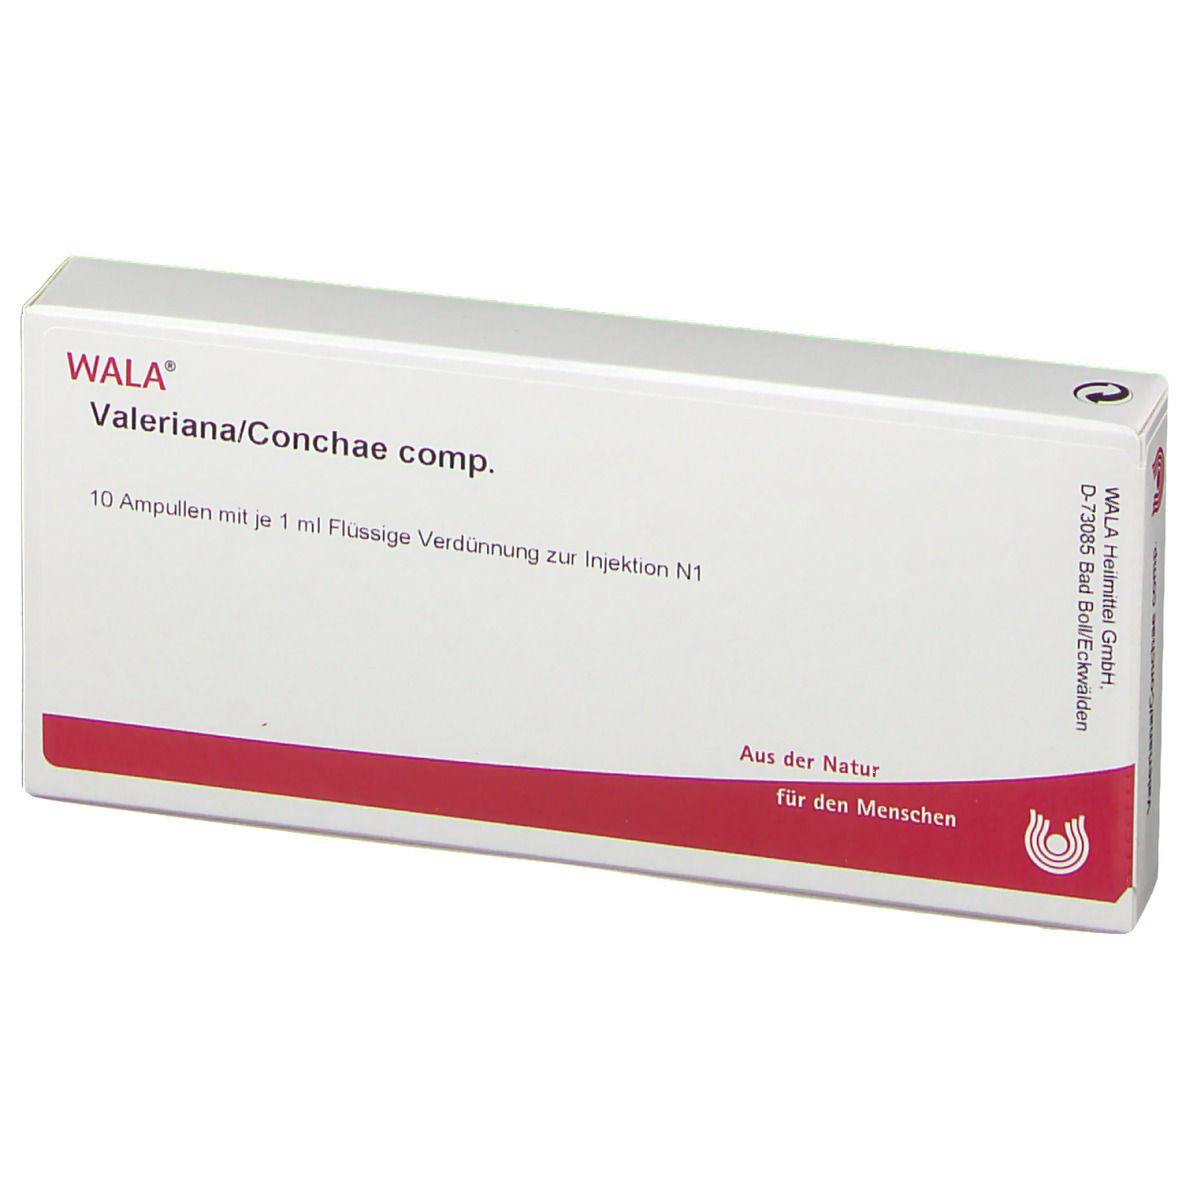 WALA® Valeriana Conchae Comp.